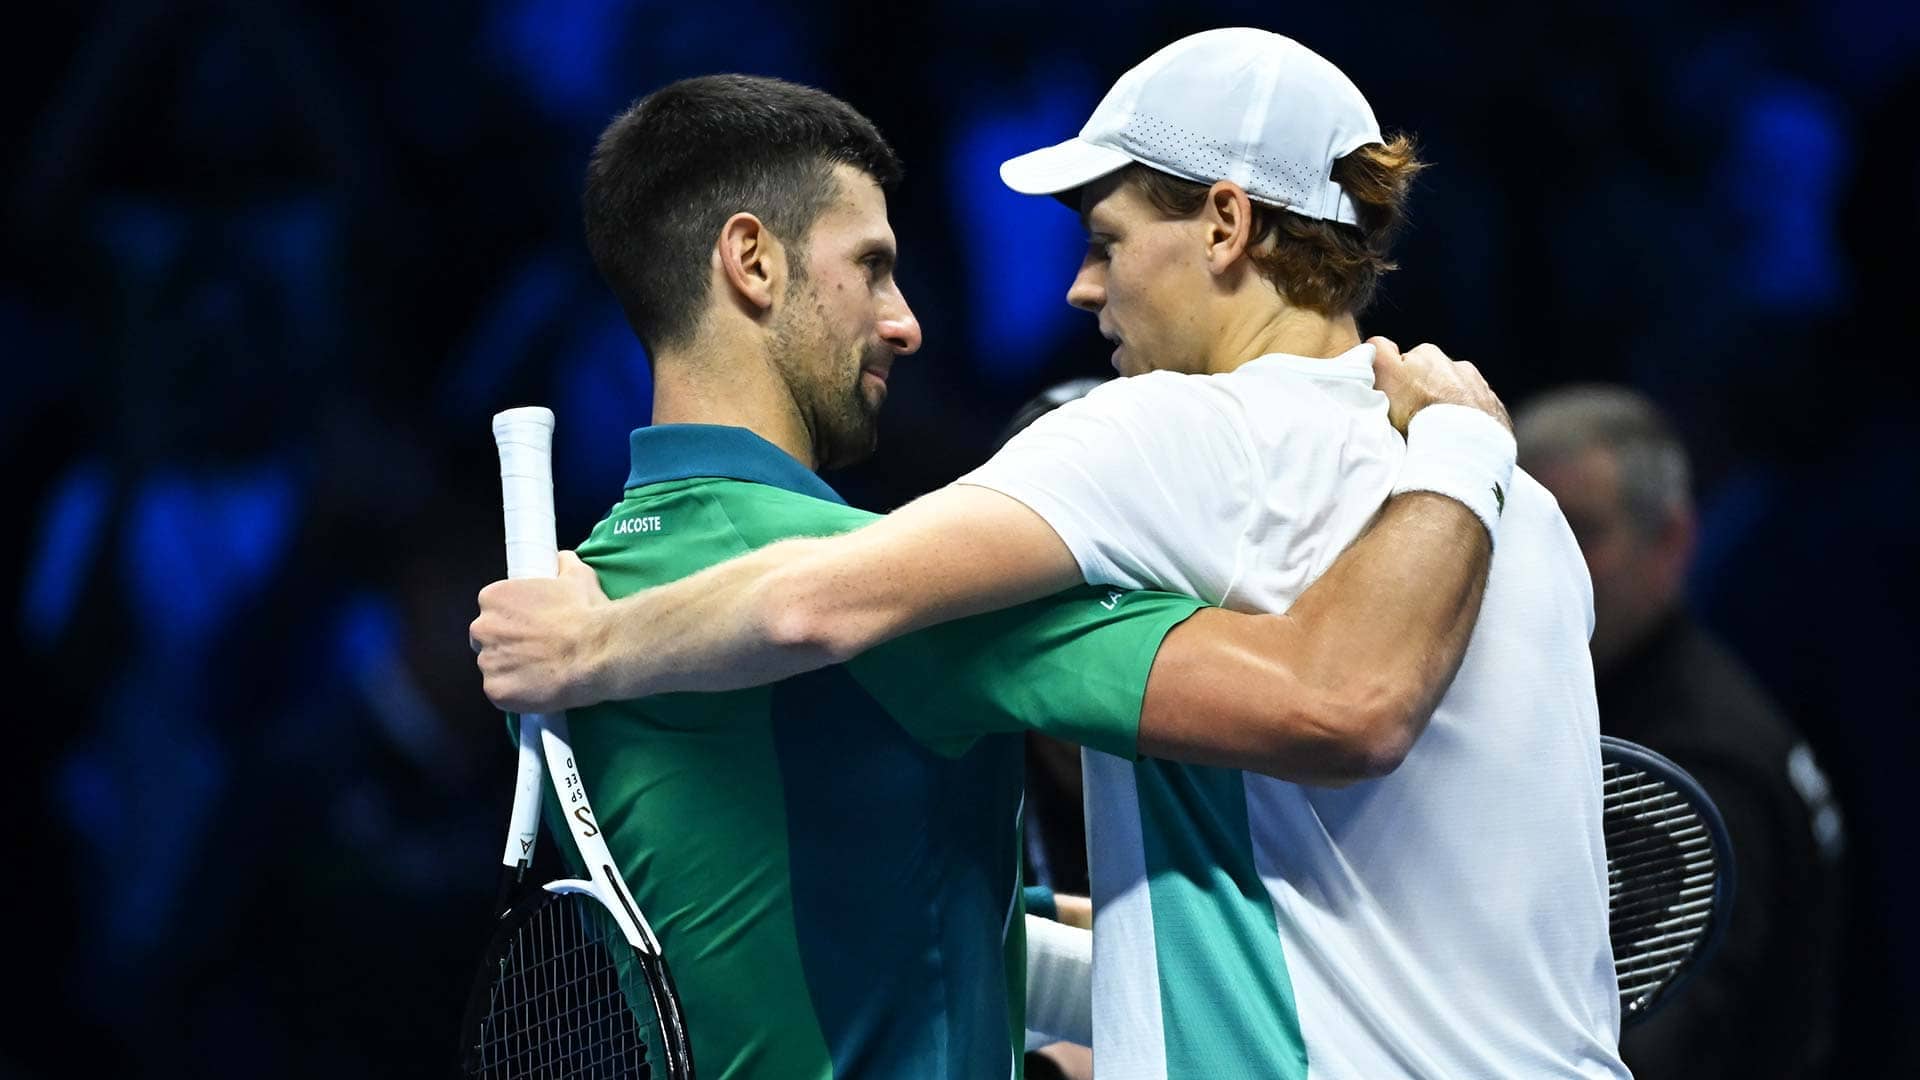 Novak Djokovic and Jannik Sinner will meet in the semi-finals at the Australian Open on Friday afternoon.